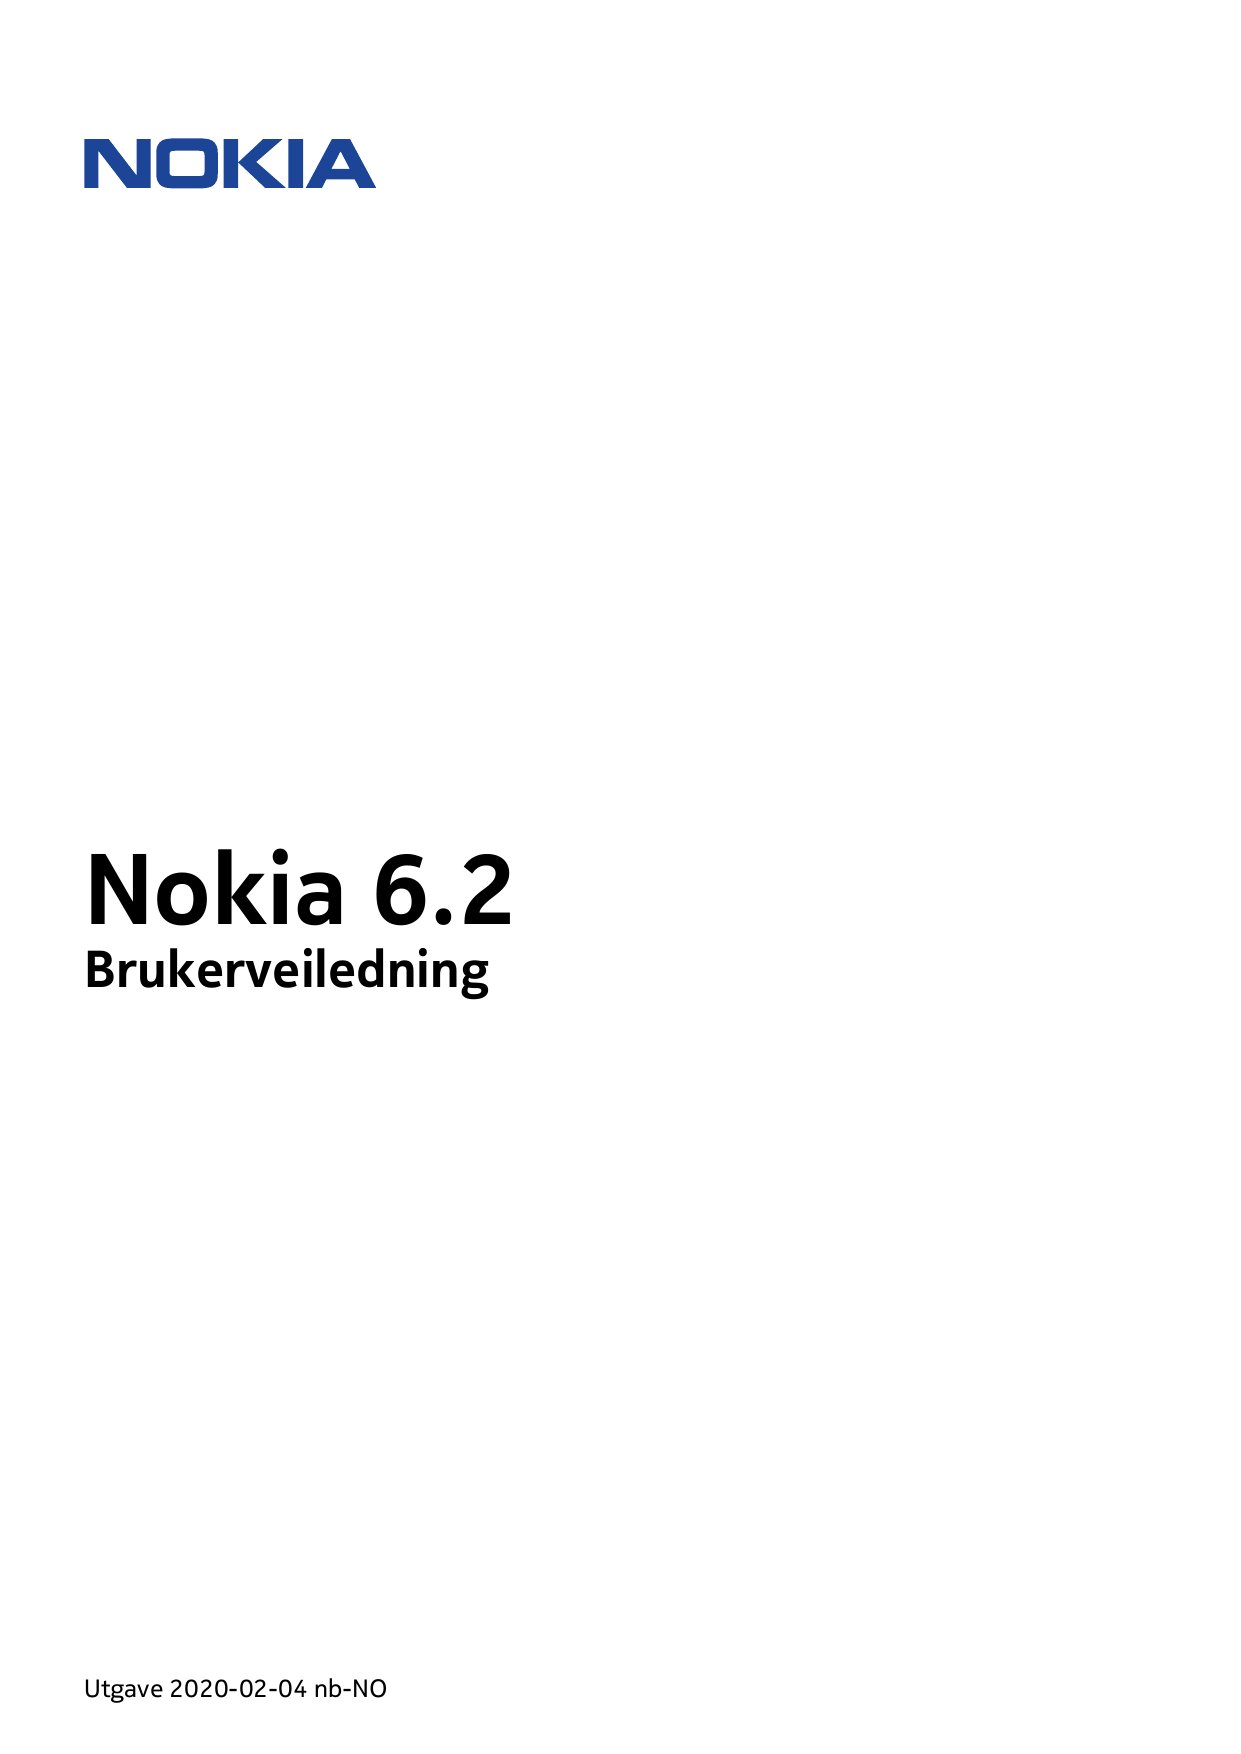 Nokia 6.2BrukerveiledningUtgave 2020-02-04 nb-NO